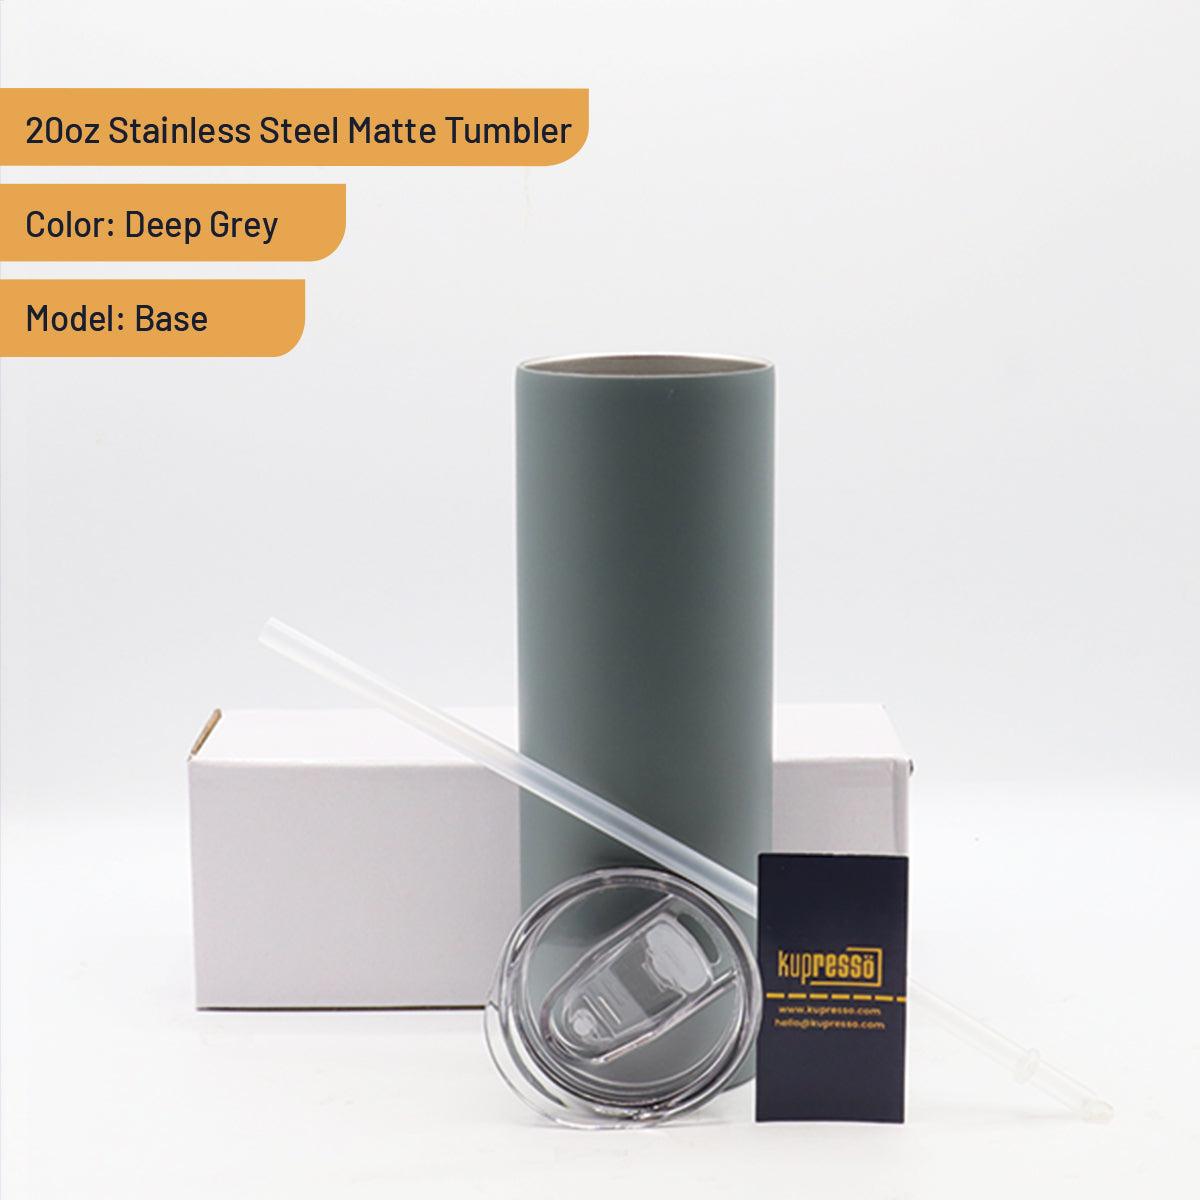 20oz Stainless Steel Matte Tumbler 20oz Stainless Steel Tumblers Kupresso Base (White Gift Box) Deep Grey 